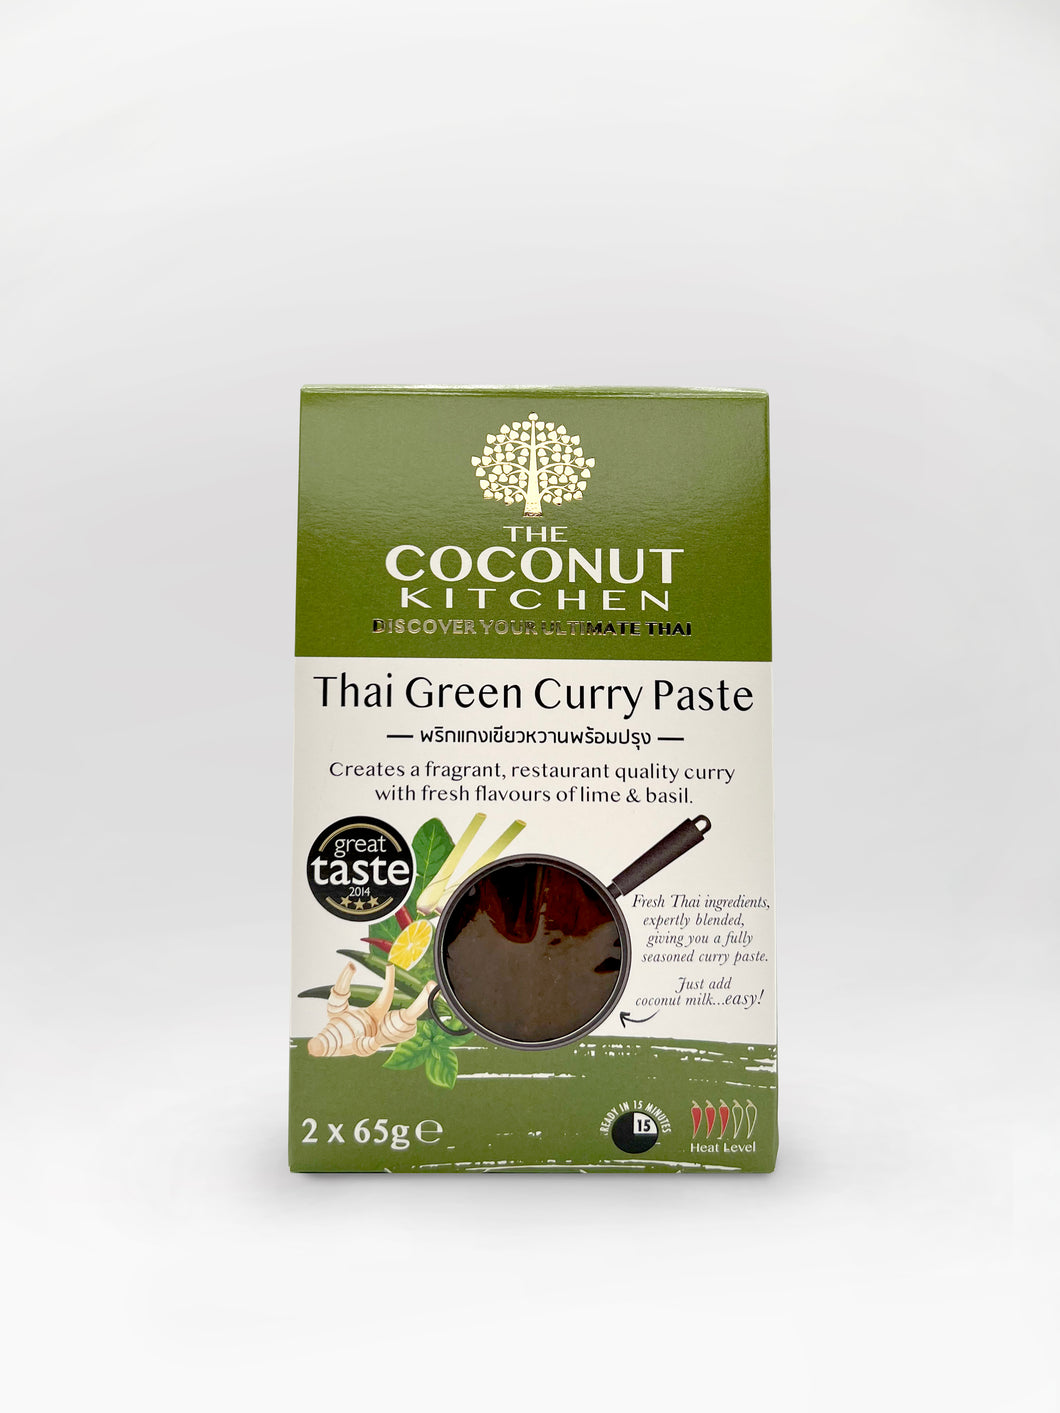 Coconut Kitchen Thai Green Curry Paste 2 x 65g